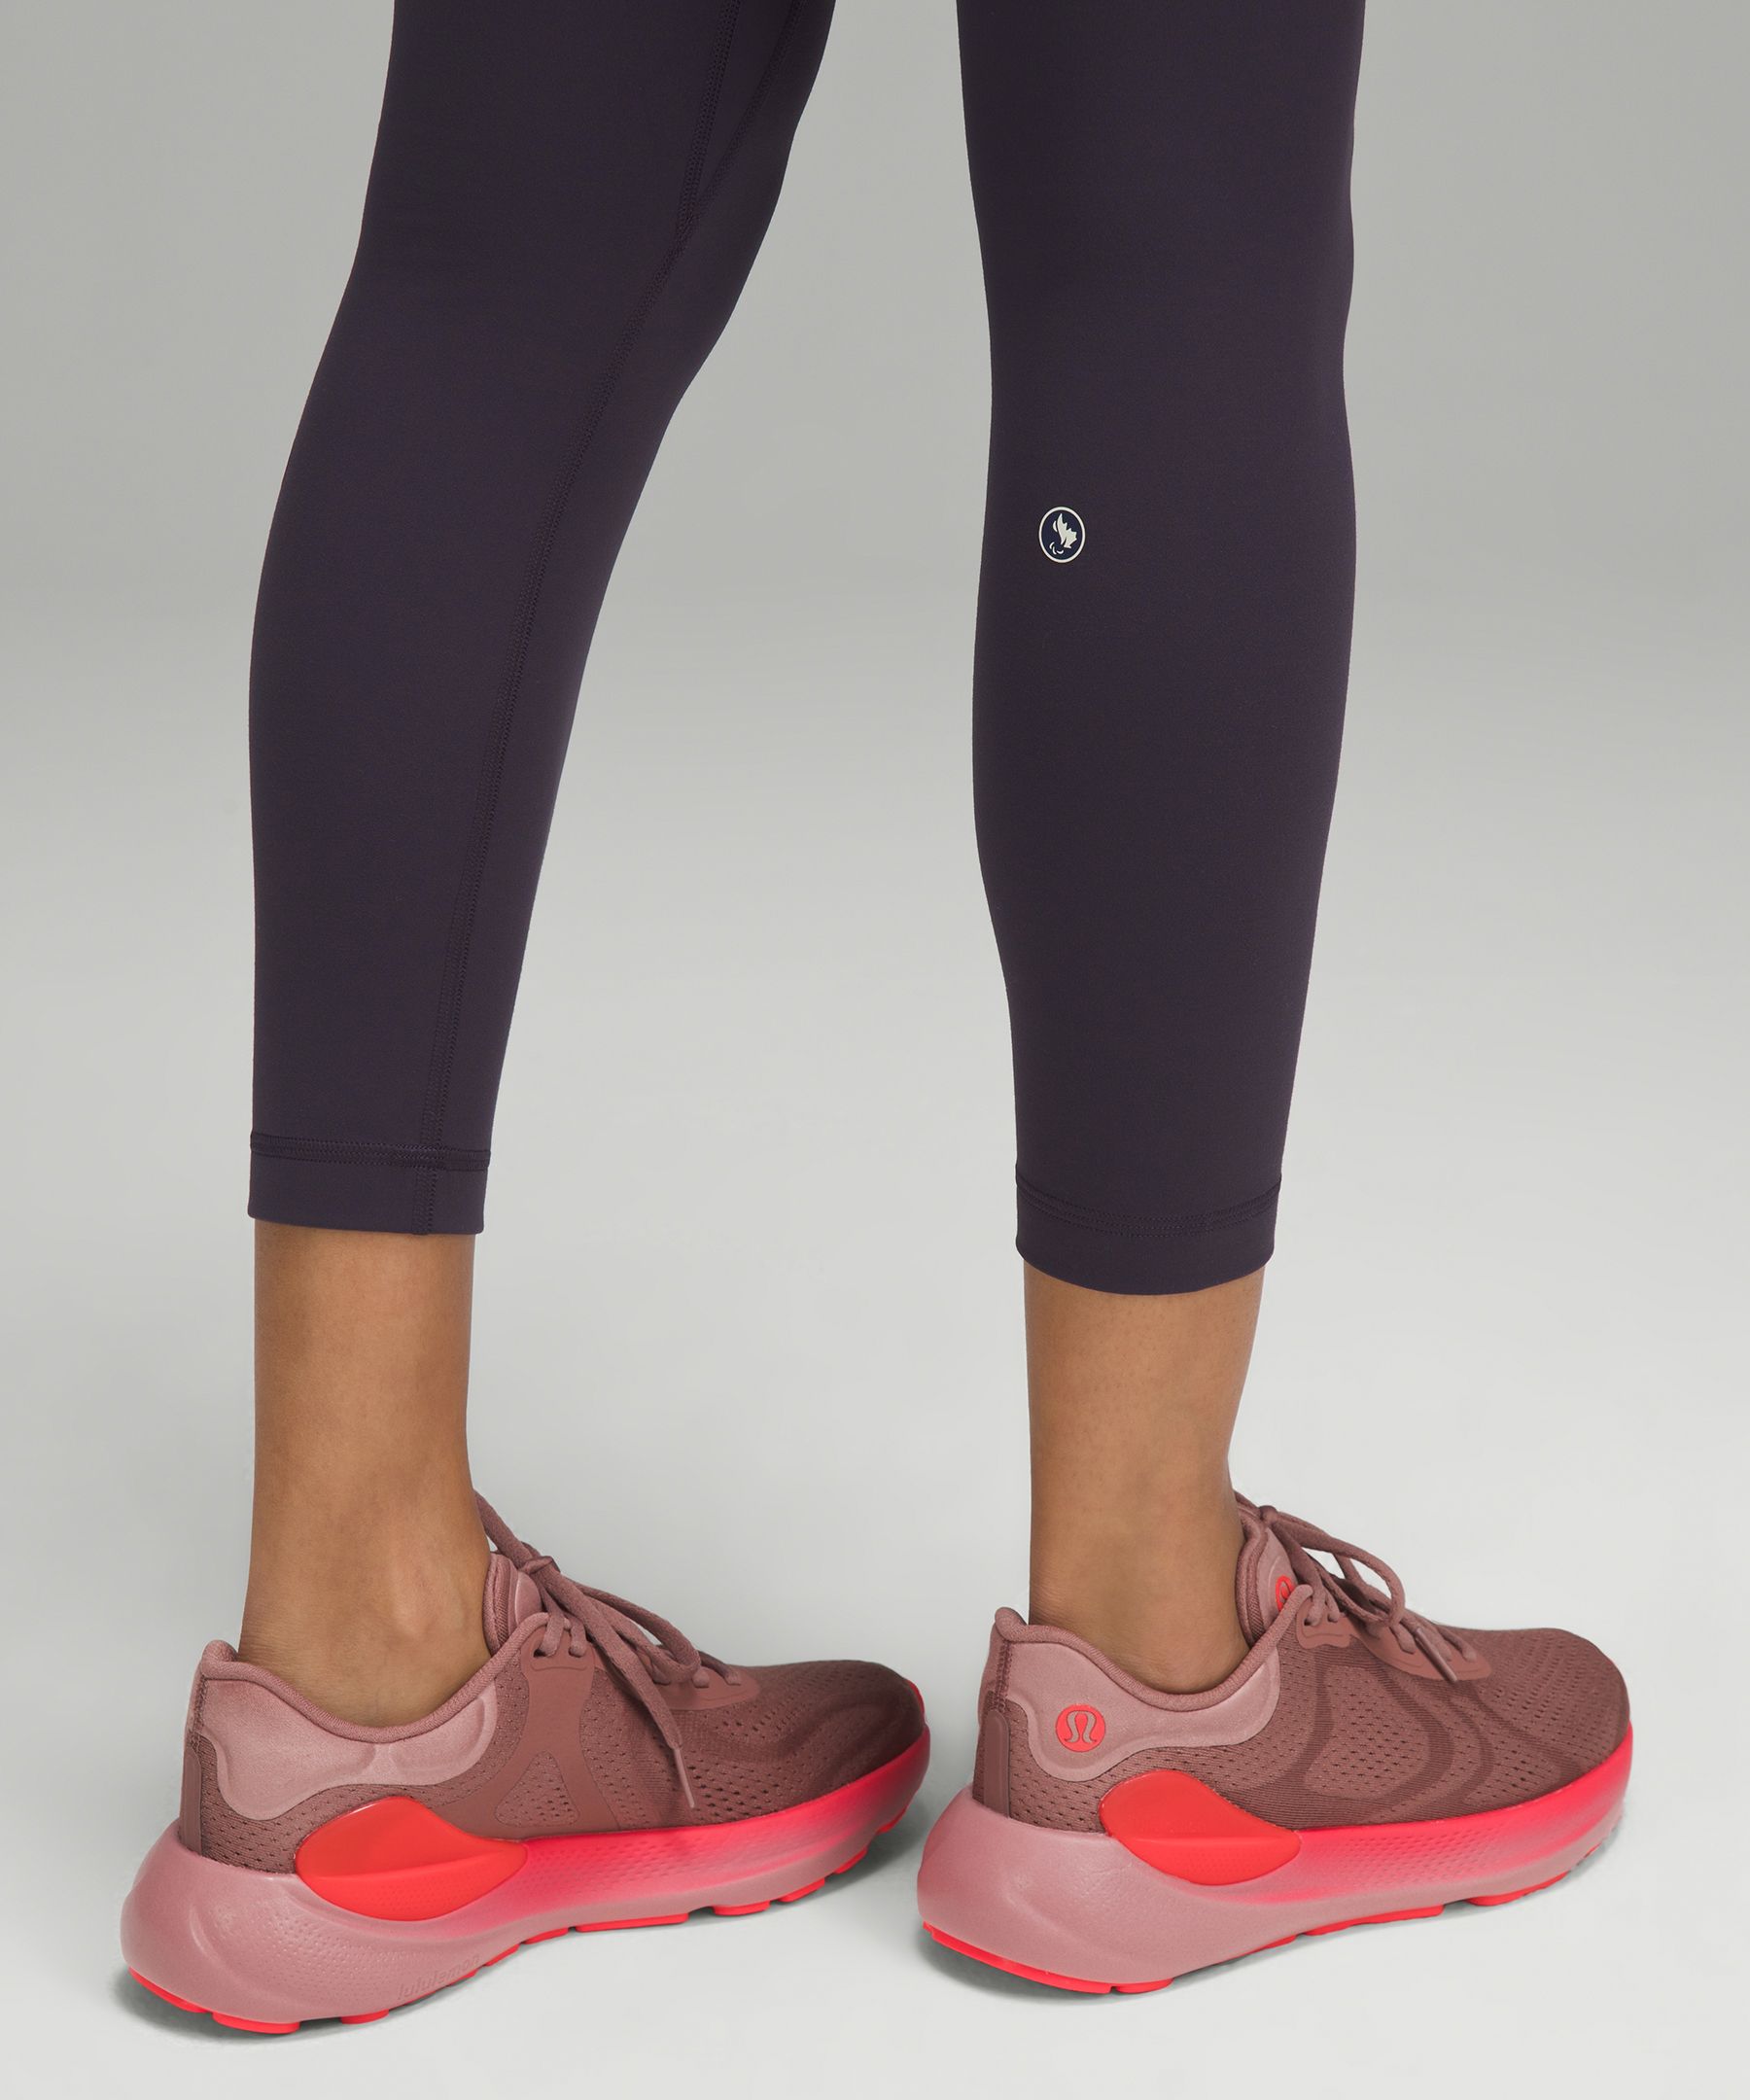 Team Canada lululemon Align™ High-Rise Pant 25" *CPC Logo | Women's Leggings/Tights